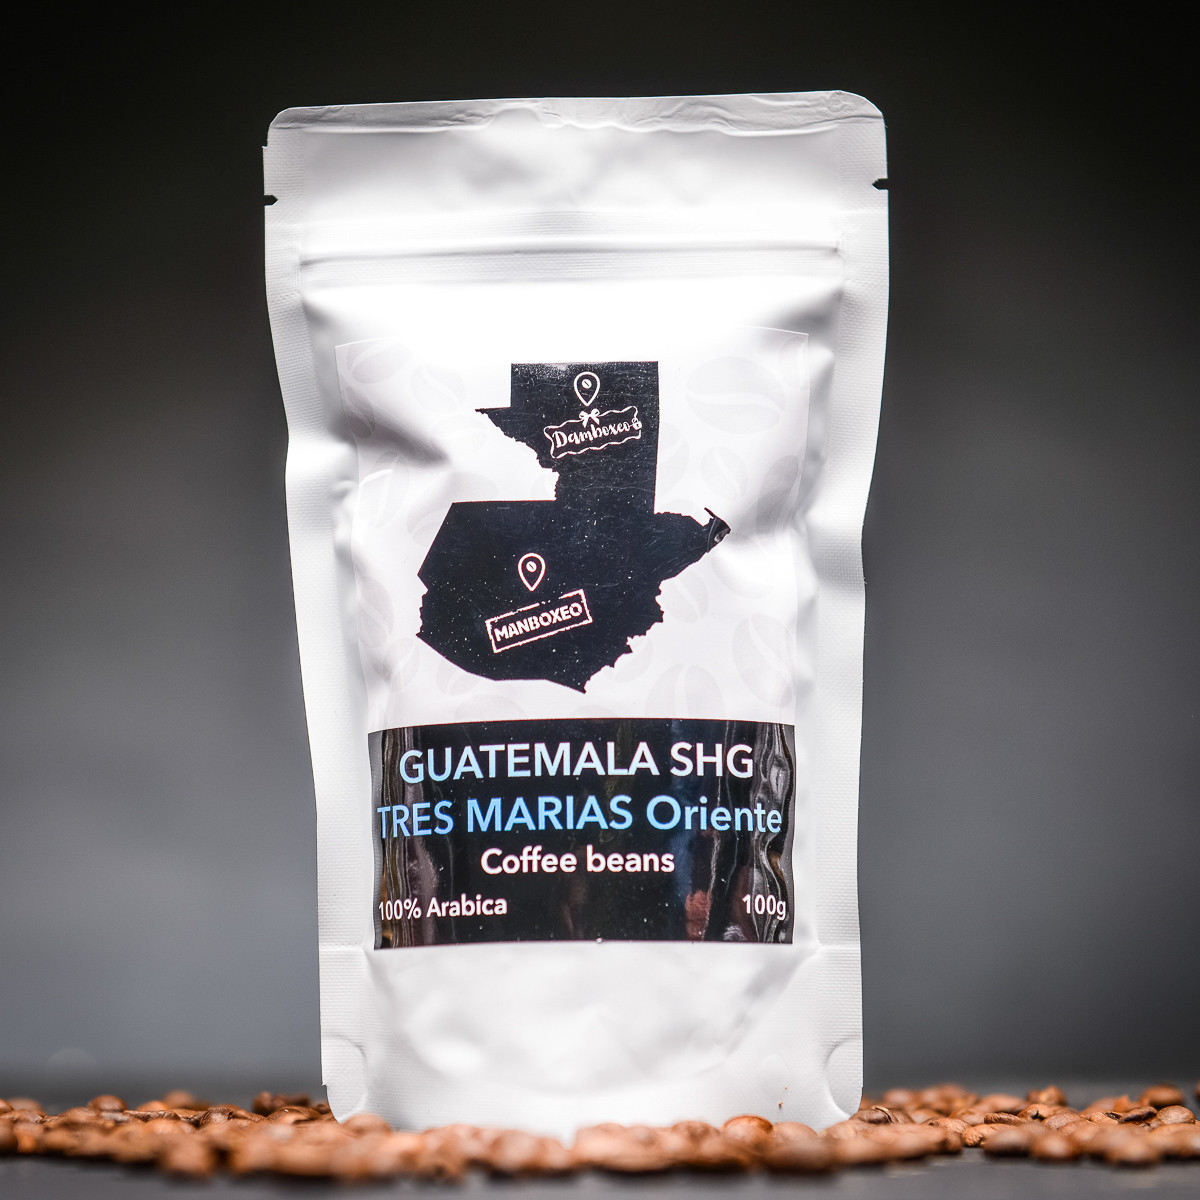 Káva Guatemala SHG Tres Marias Oriente 100g - 100% Arabica.jpg